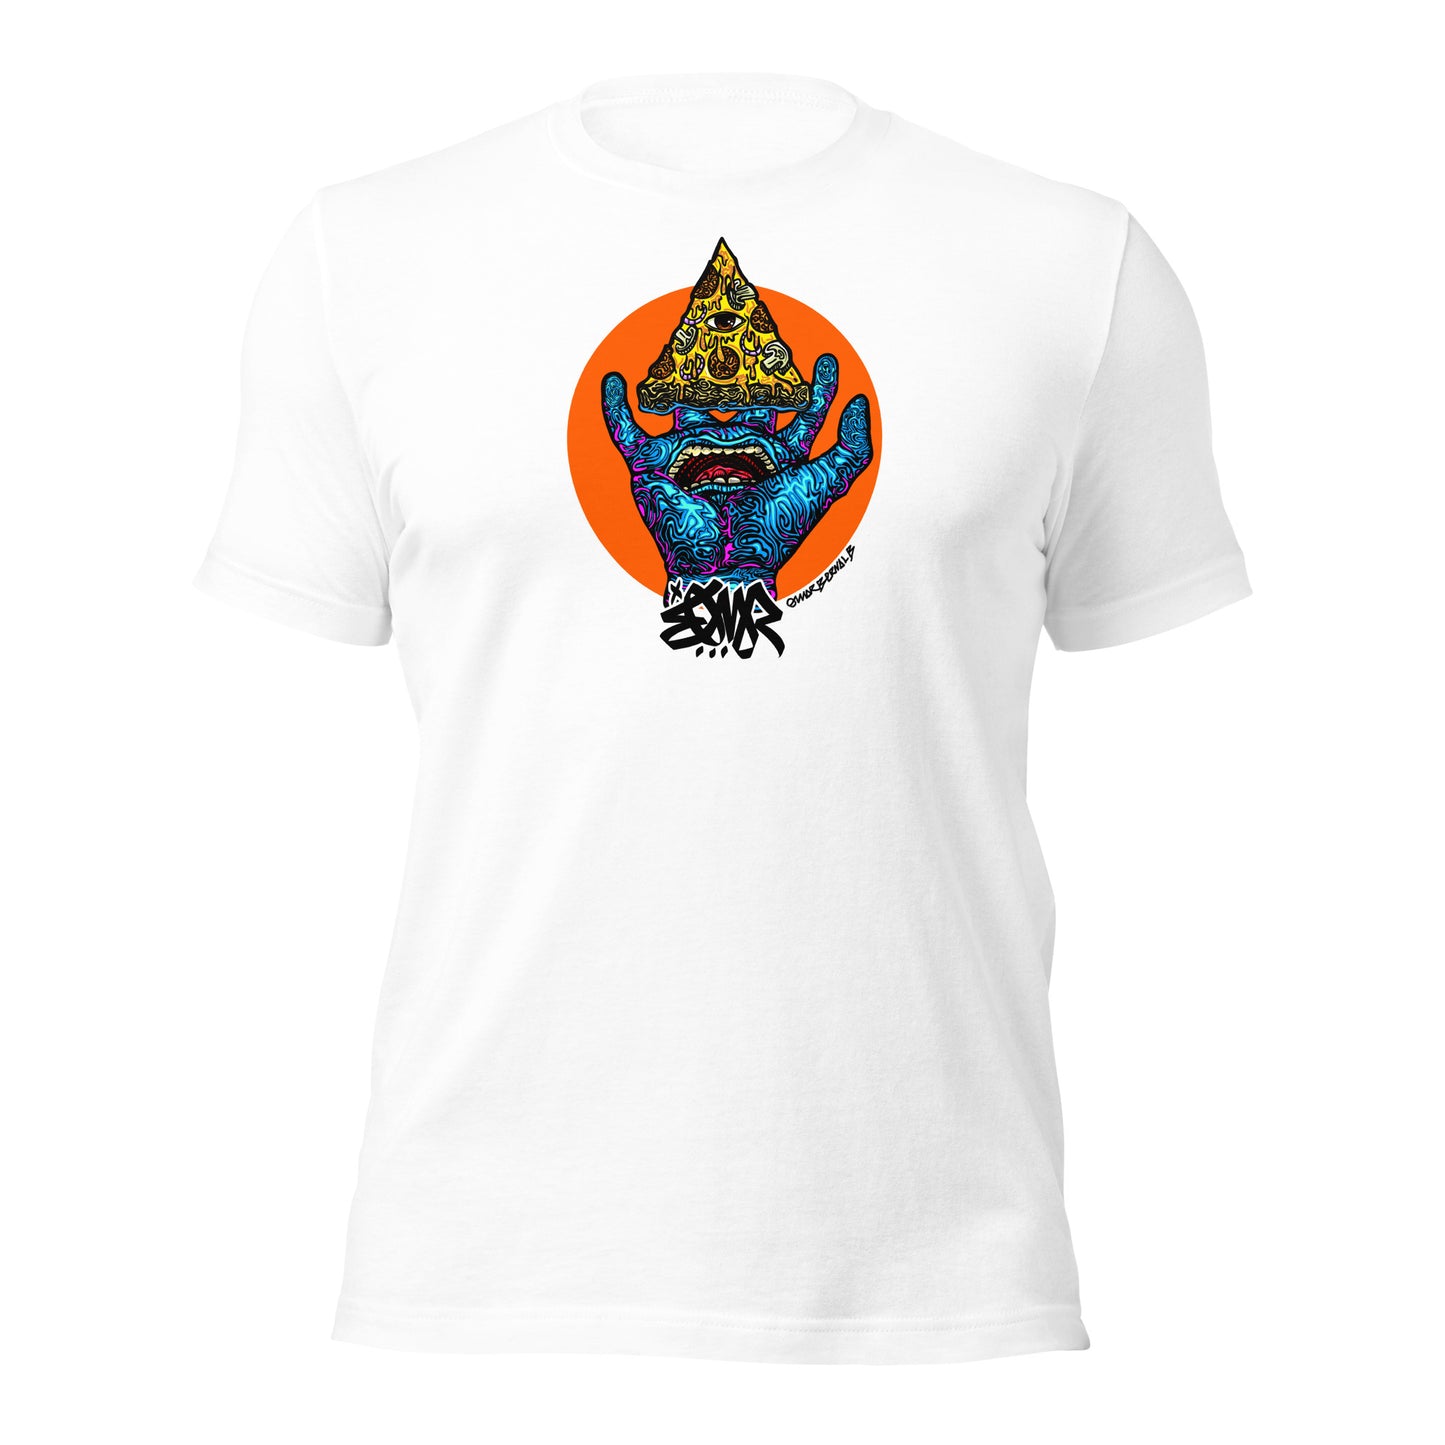 Unisex t-shirt "eat the pizzuminati" 2GSS